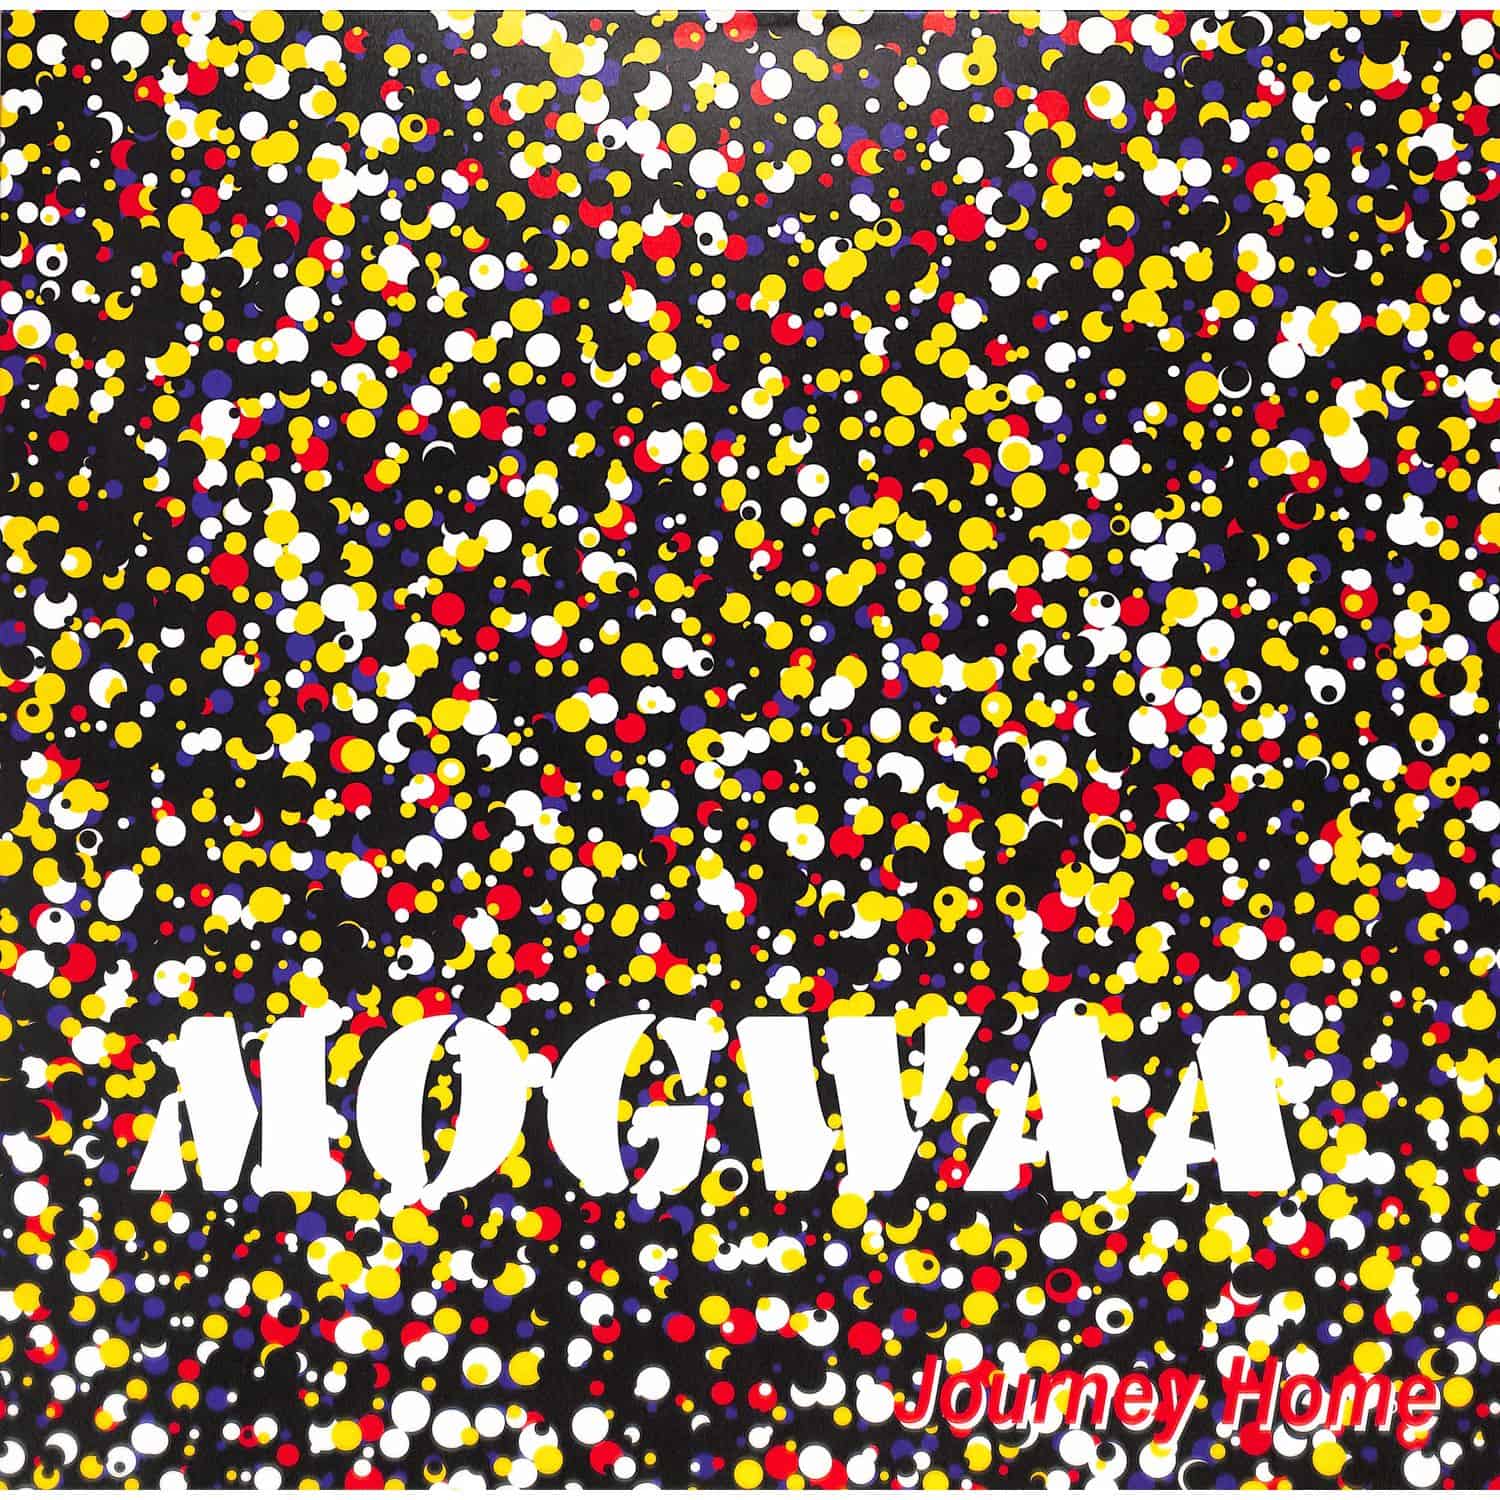 Mogwaa - JOURNEY HOME 